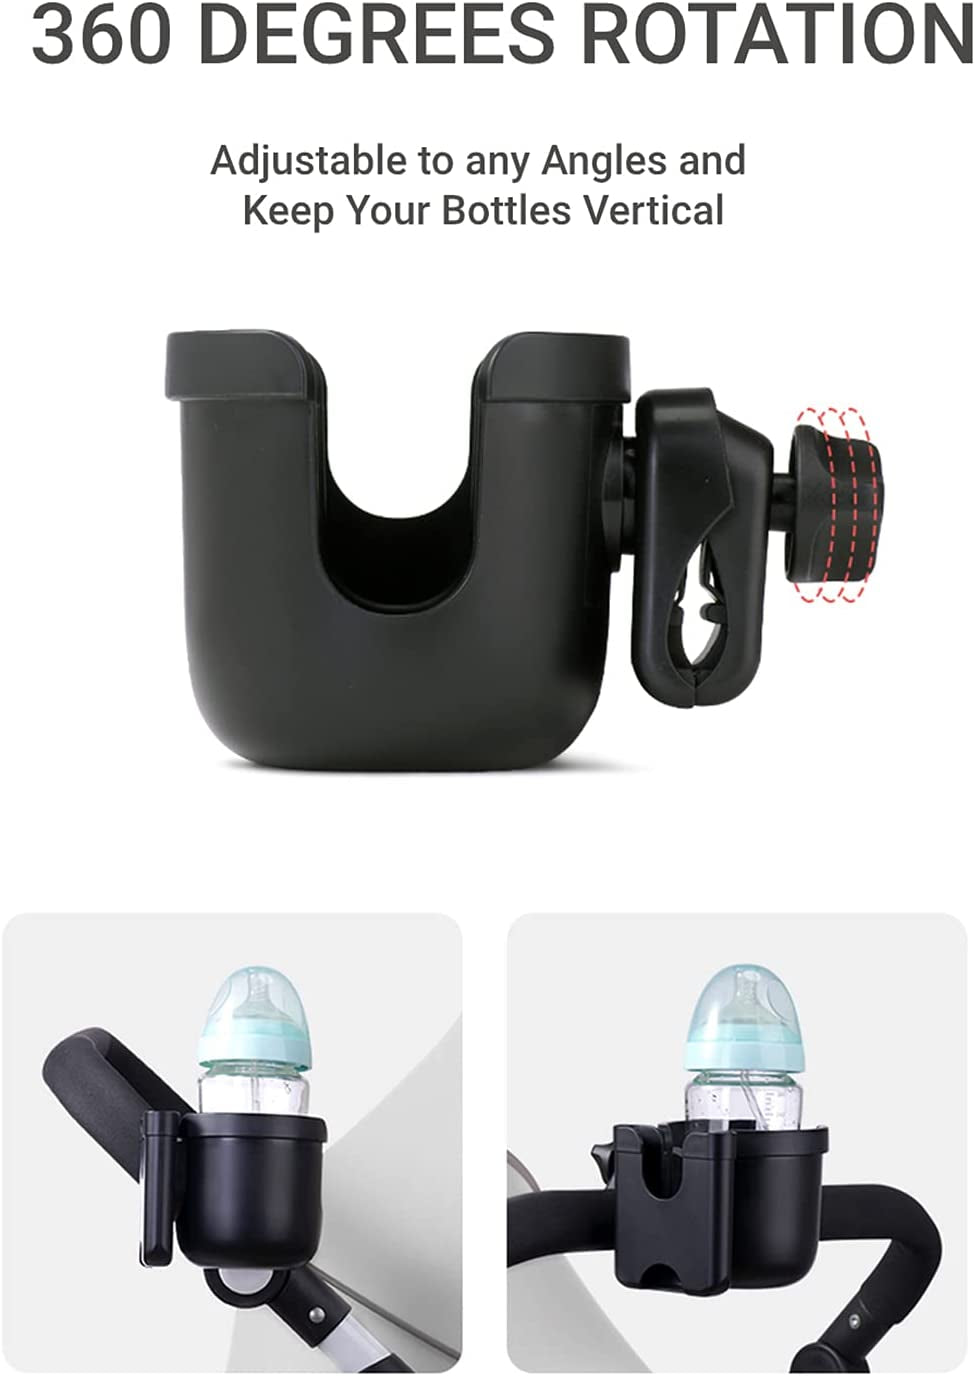 Universal Cup Holder, Stroller Cup Holder with Phone Holder, Stroller Accessories , Bike Water Bottle Holder, Treadmill, Wheelchair(Black)